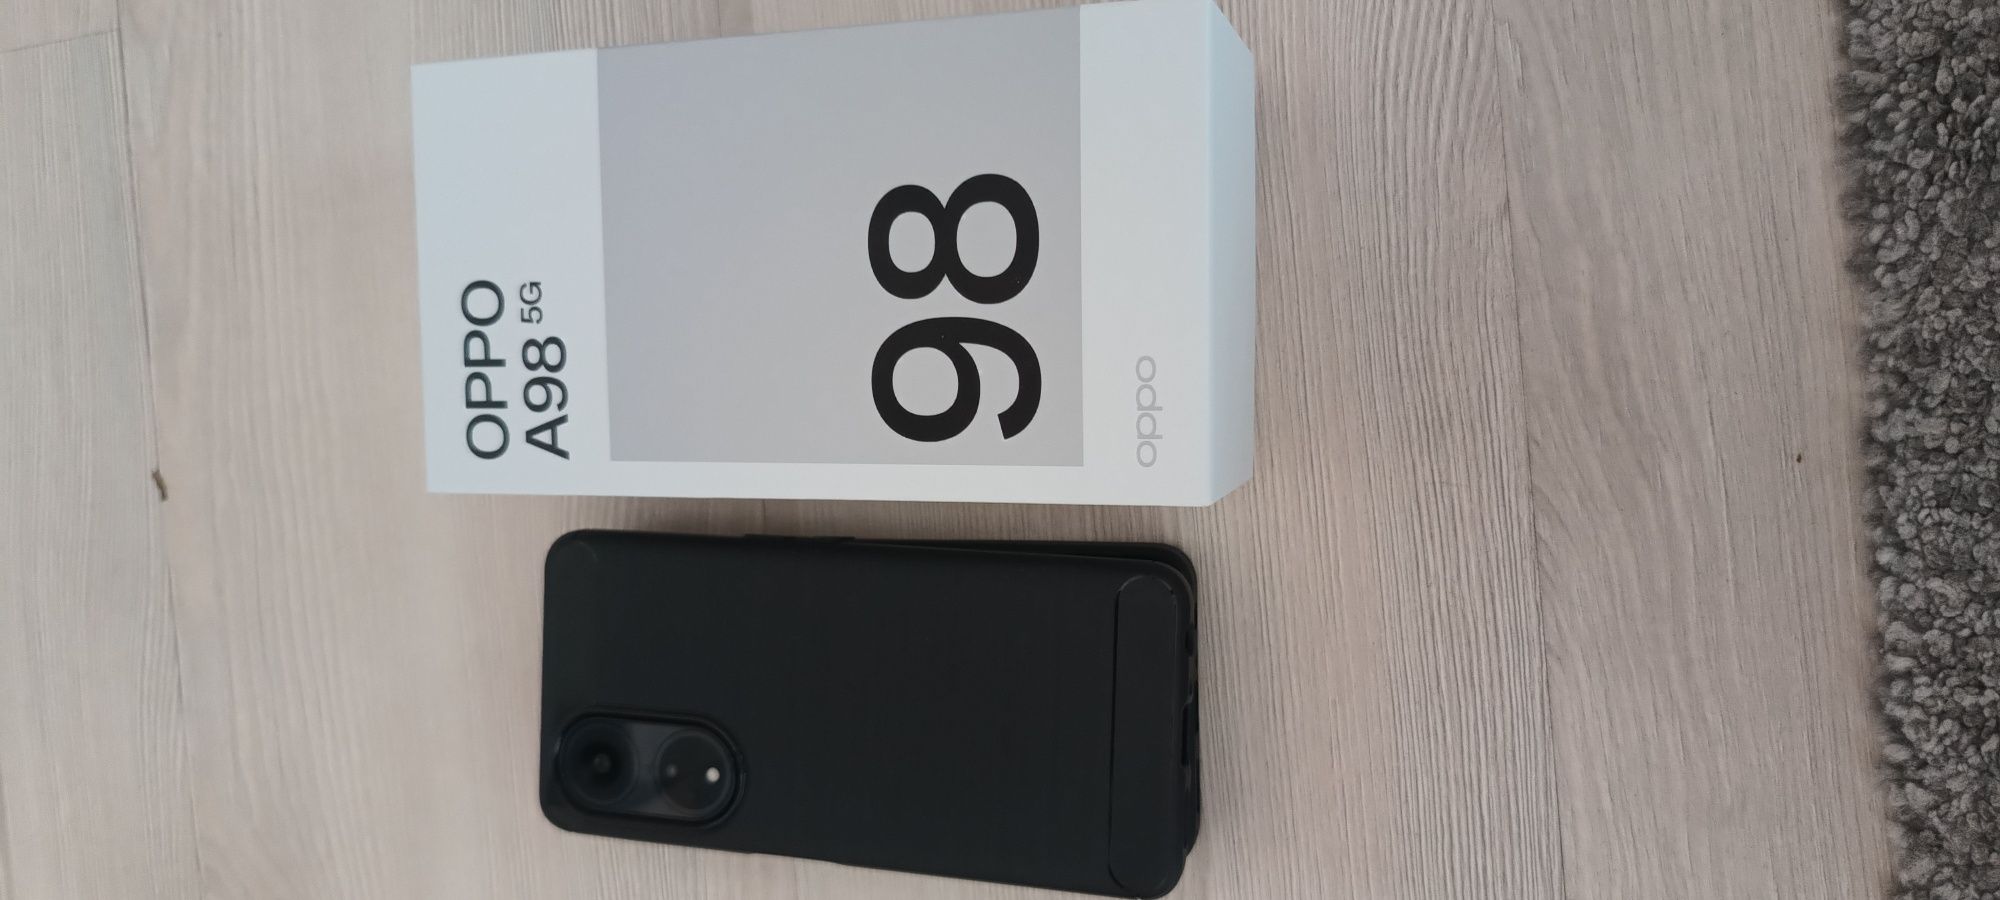 Telefon Oppo A98 5G